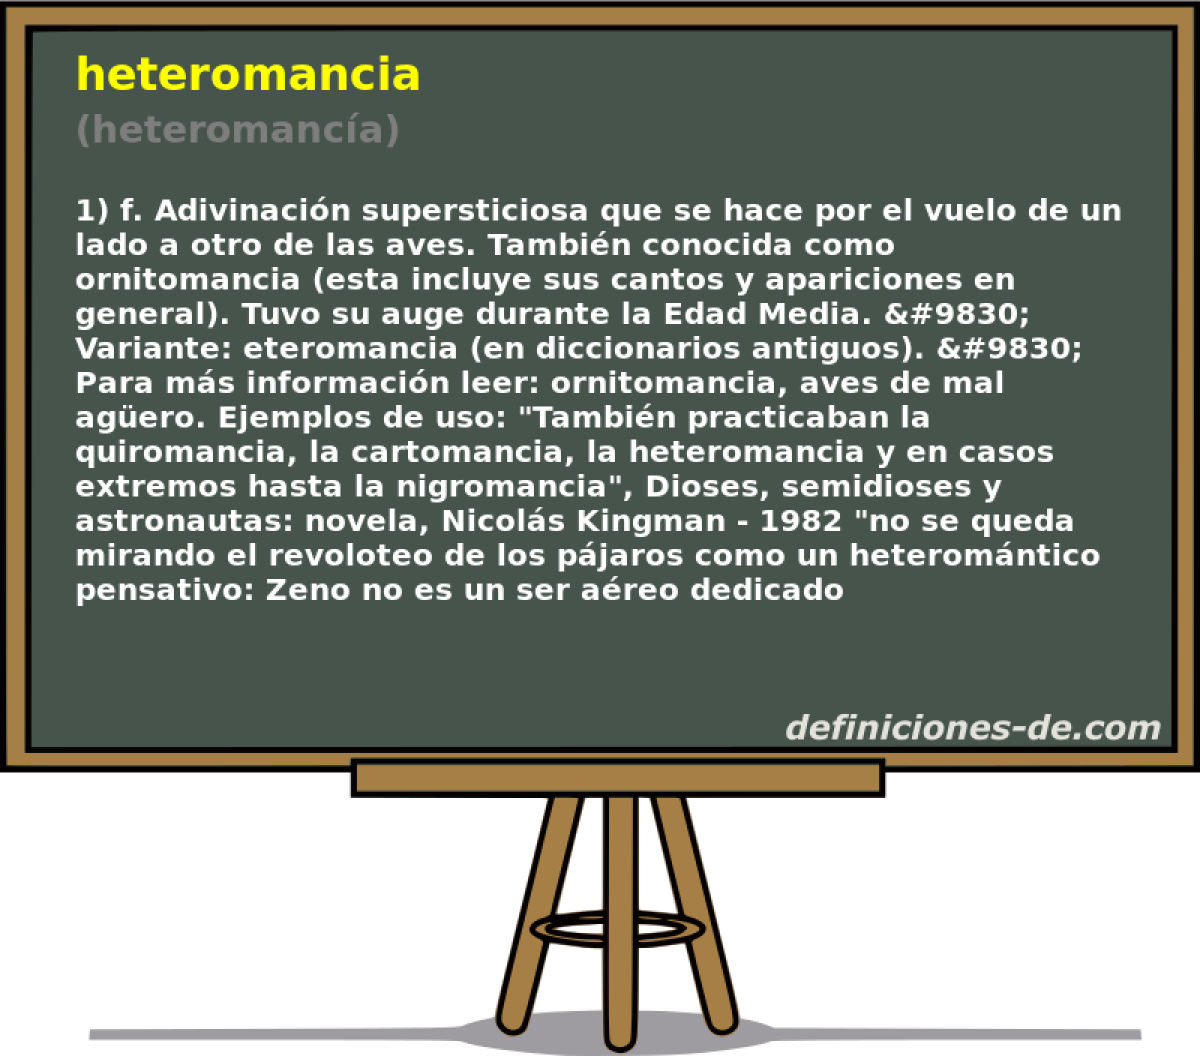 heteromancia (heteromanca)